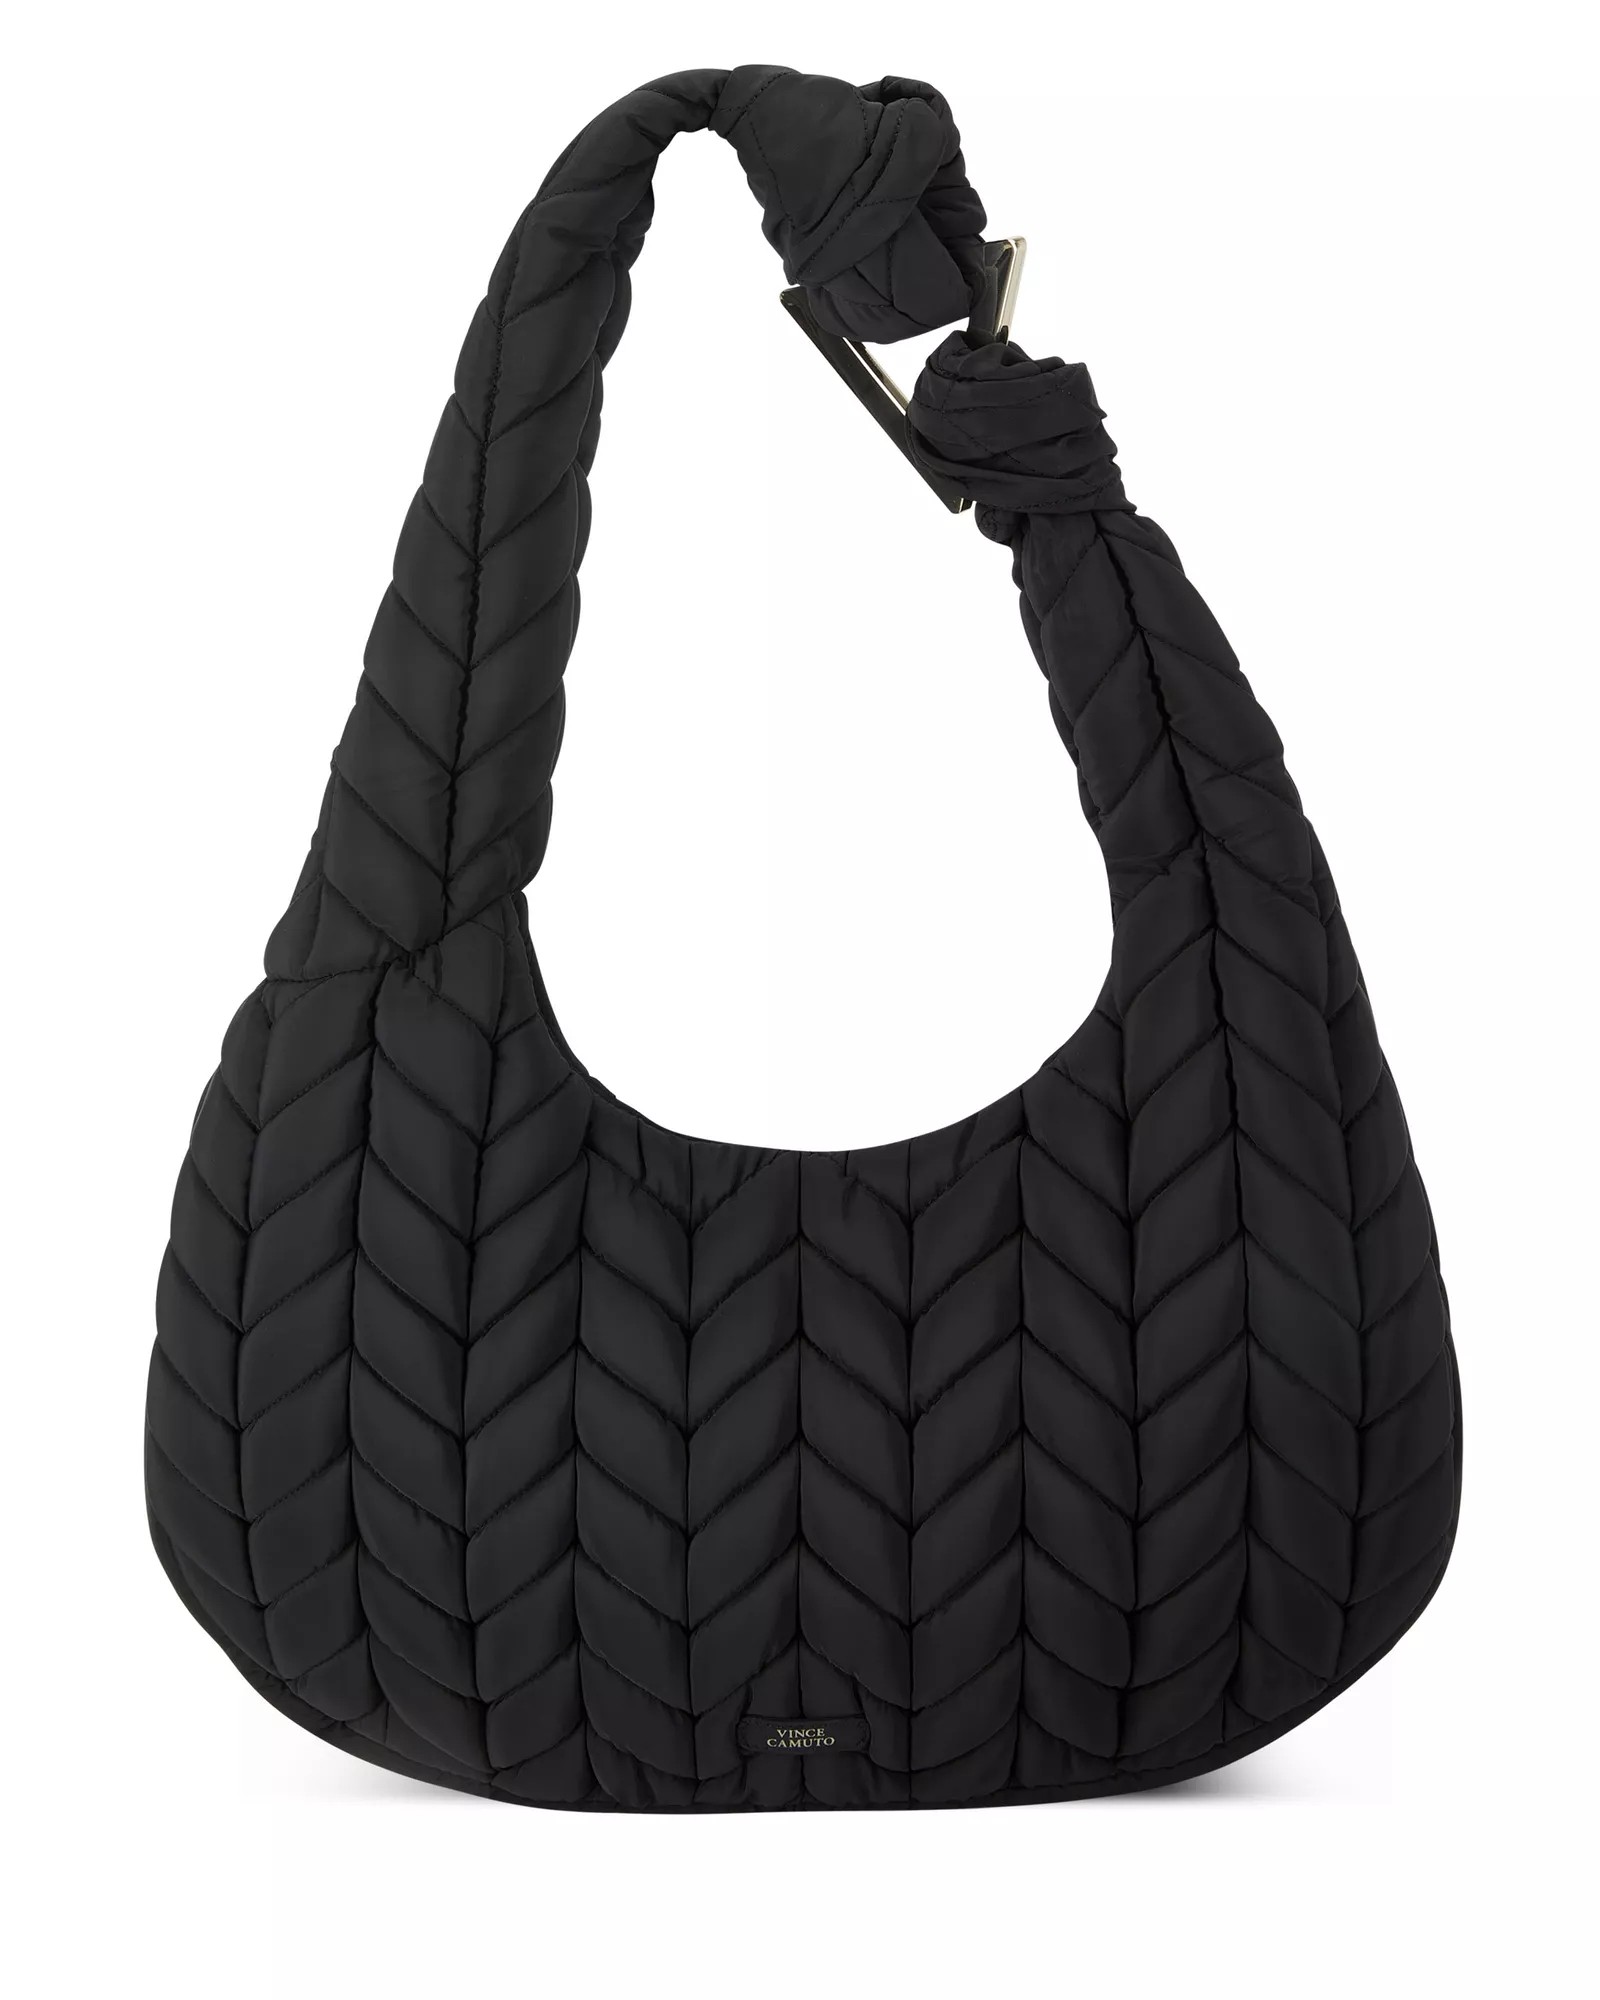 cln @CLNph #clnph #bags #hobobags #moonbag #shoulderbags #clnwallets